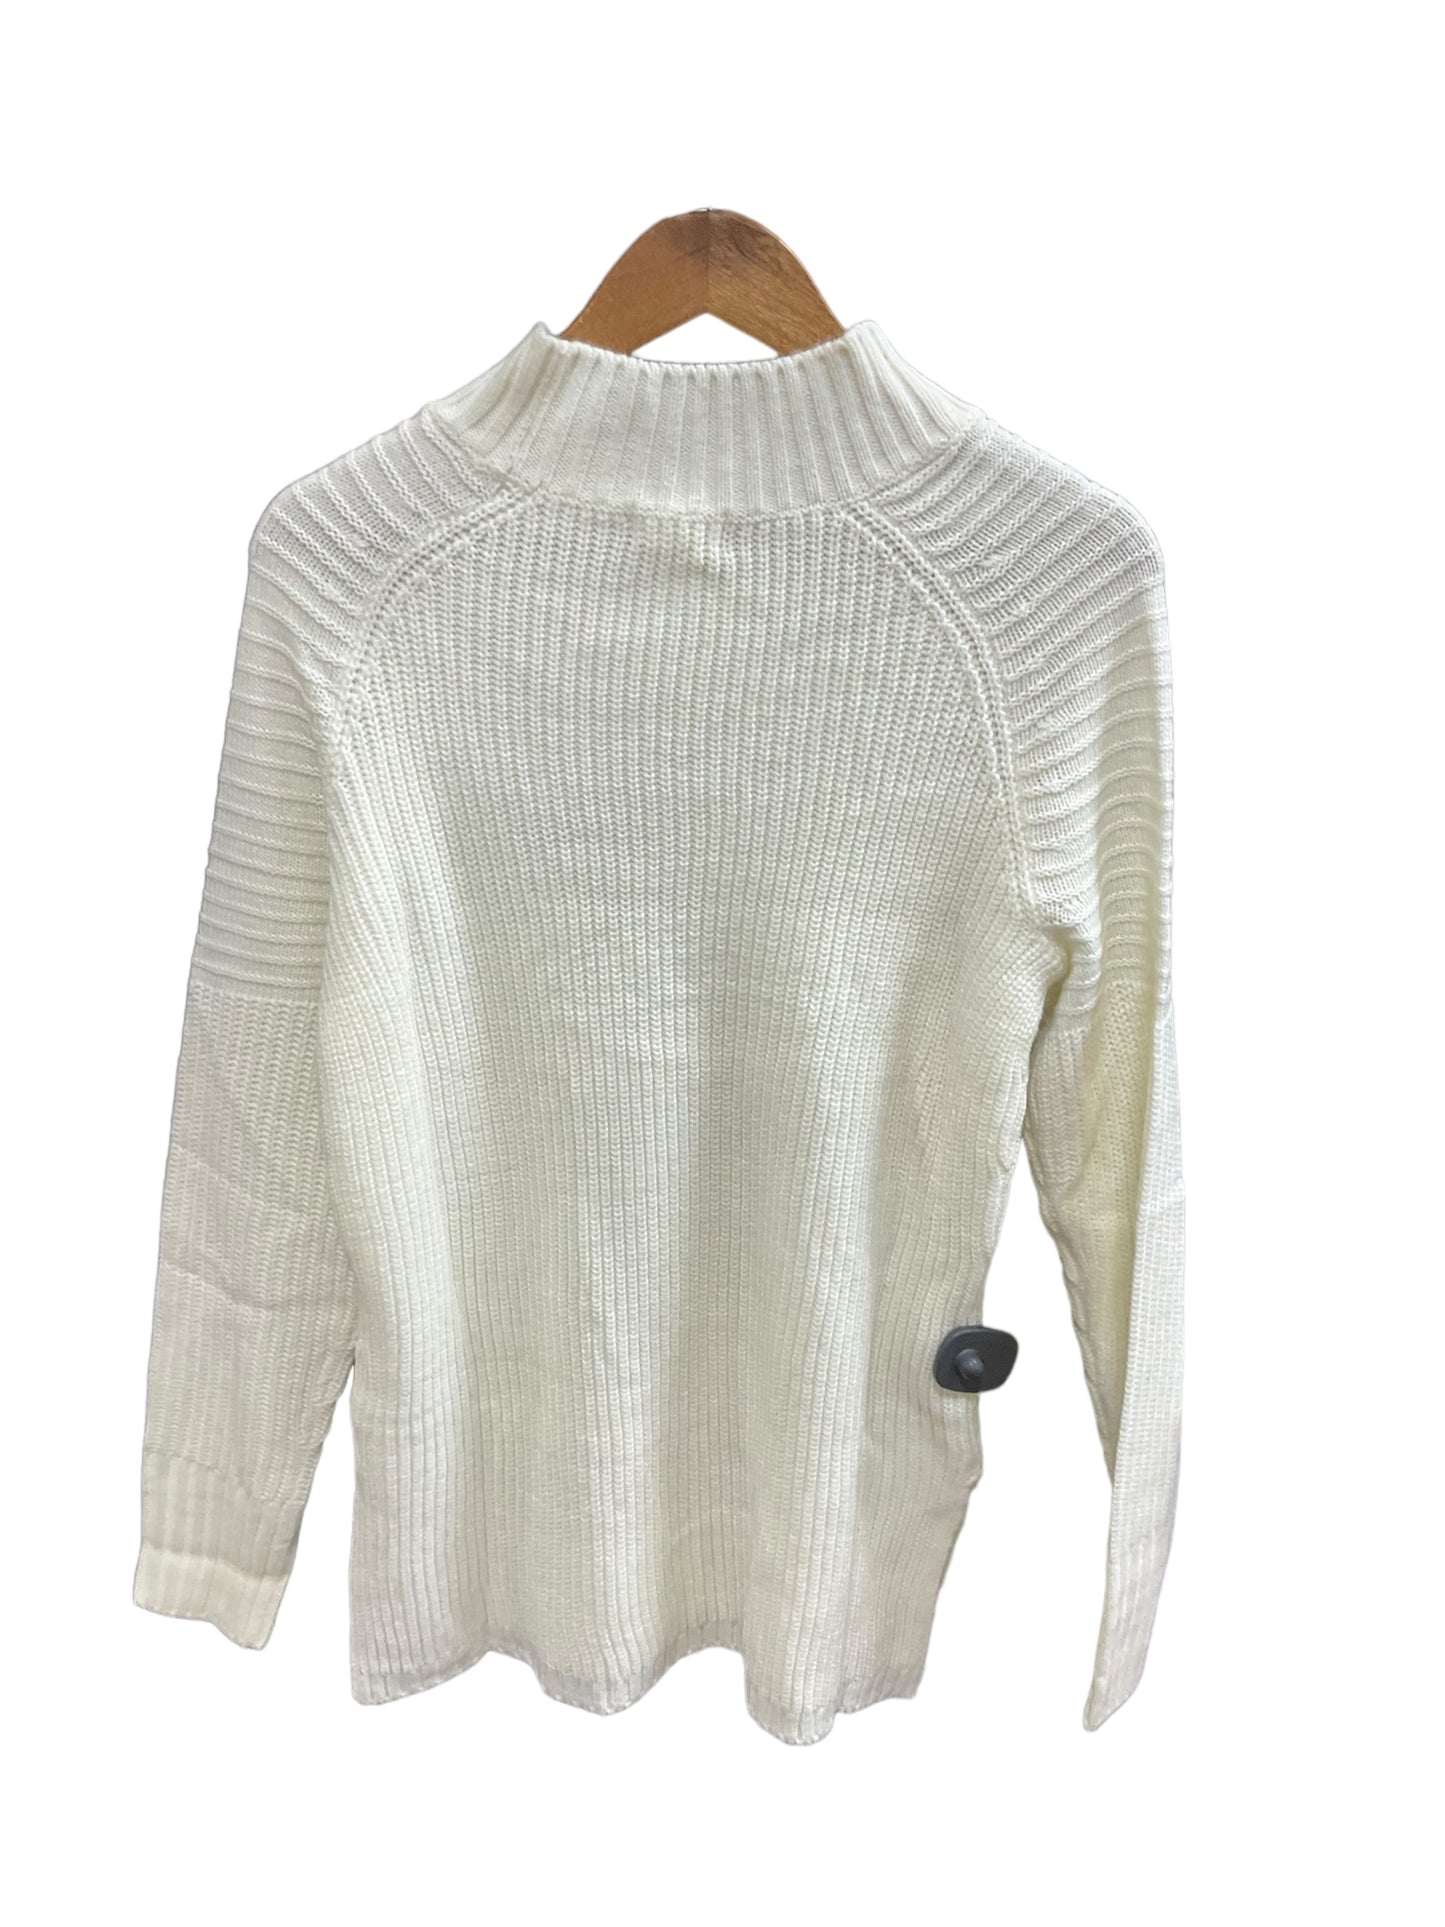 Sweater By Venus  Size: Xl